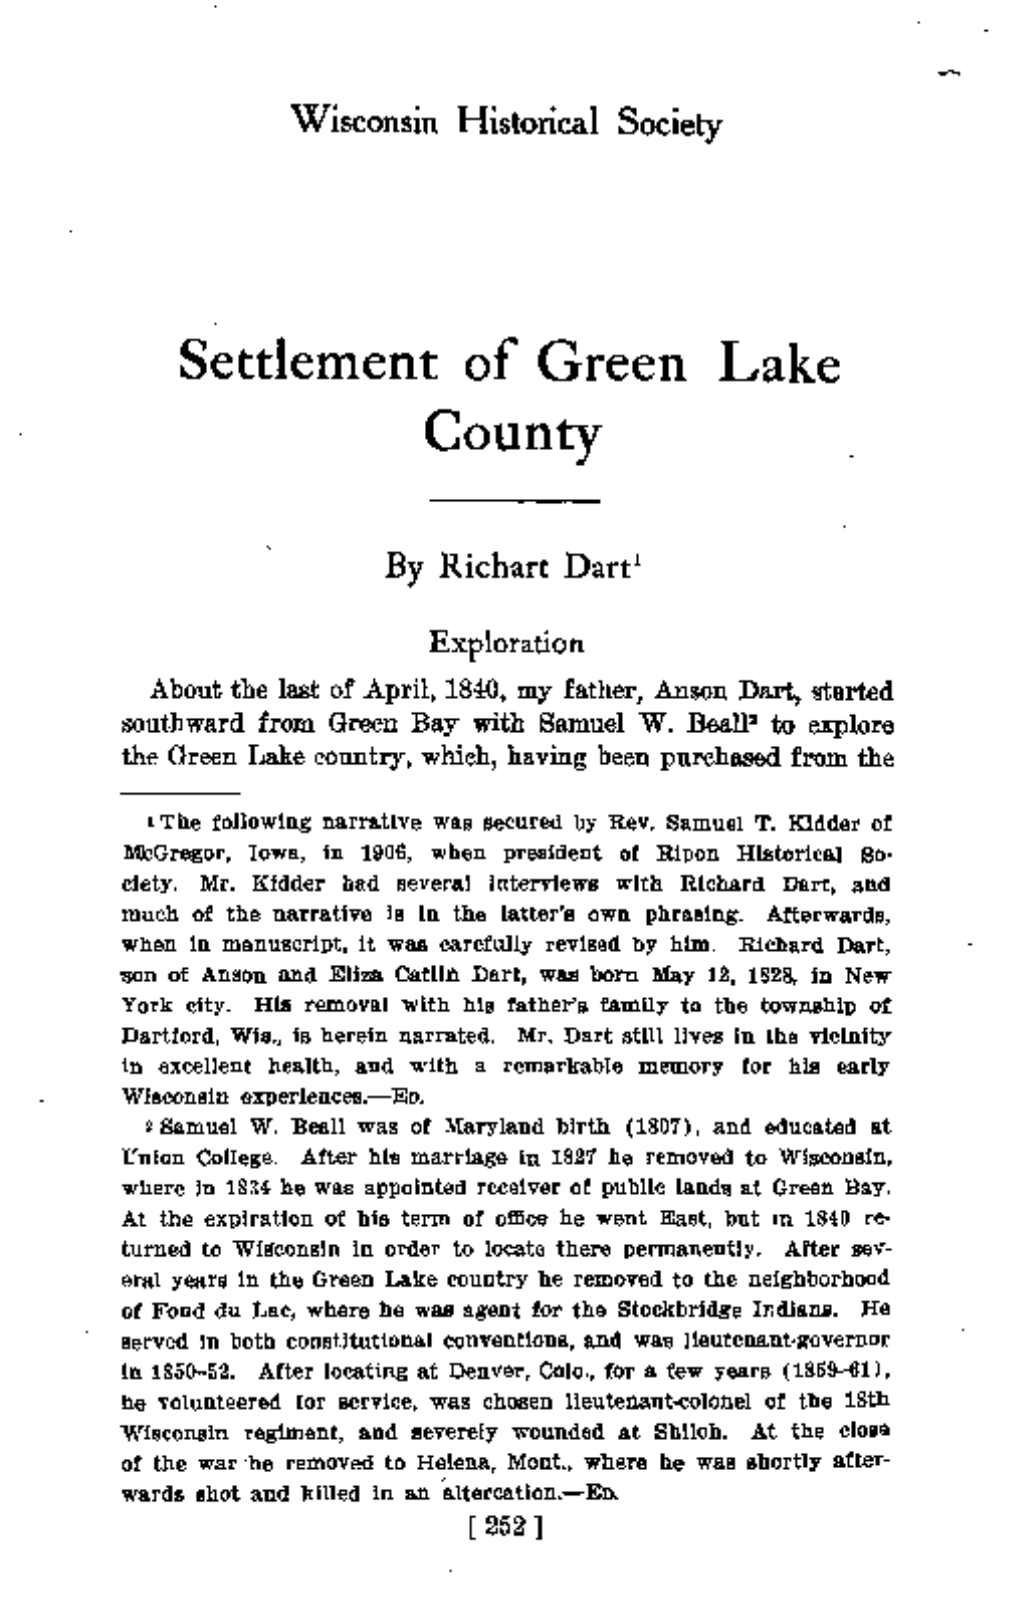 Settlement of Green Lake County